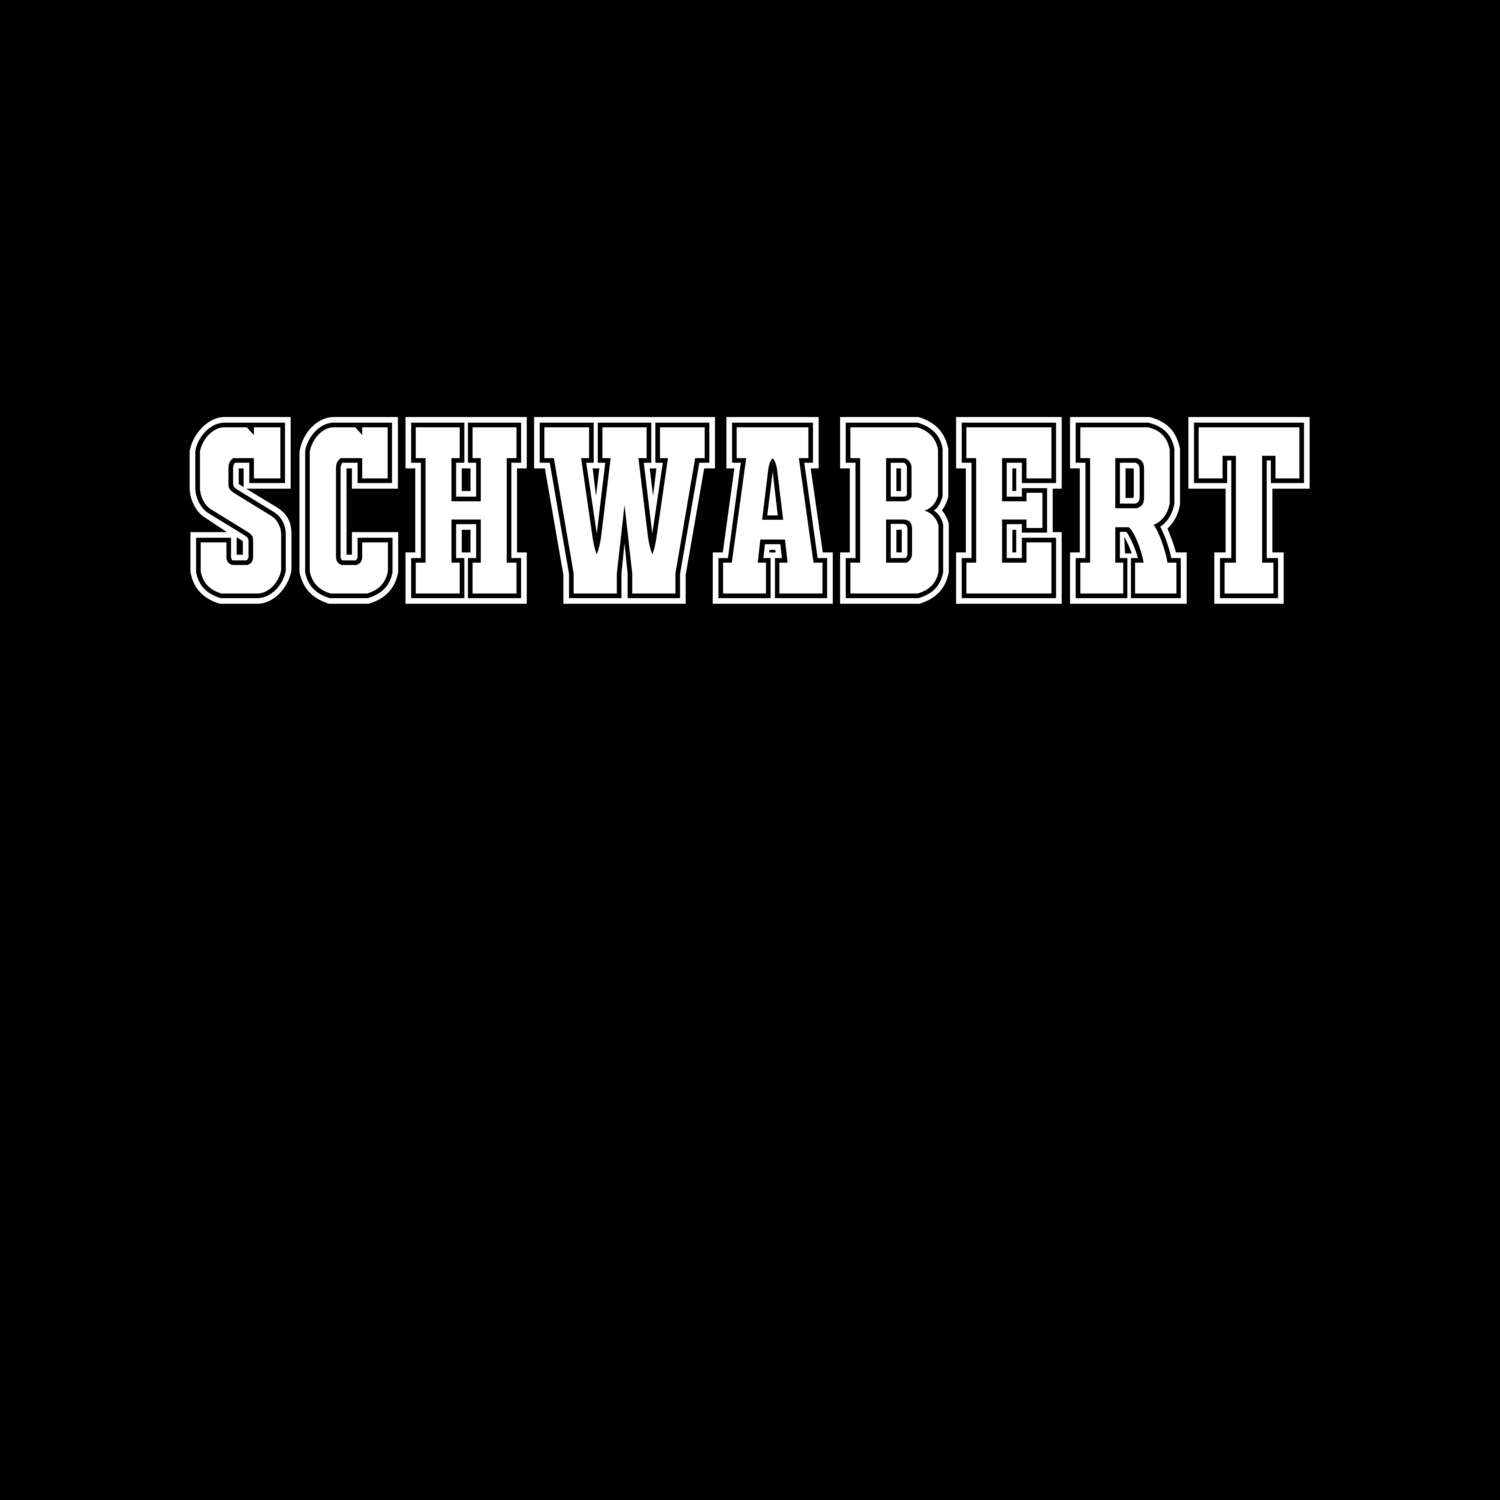 Schwabert T-Shirt »Classic«